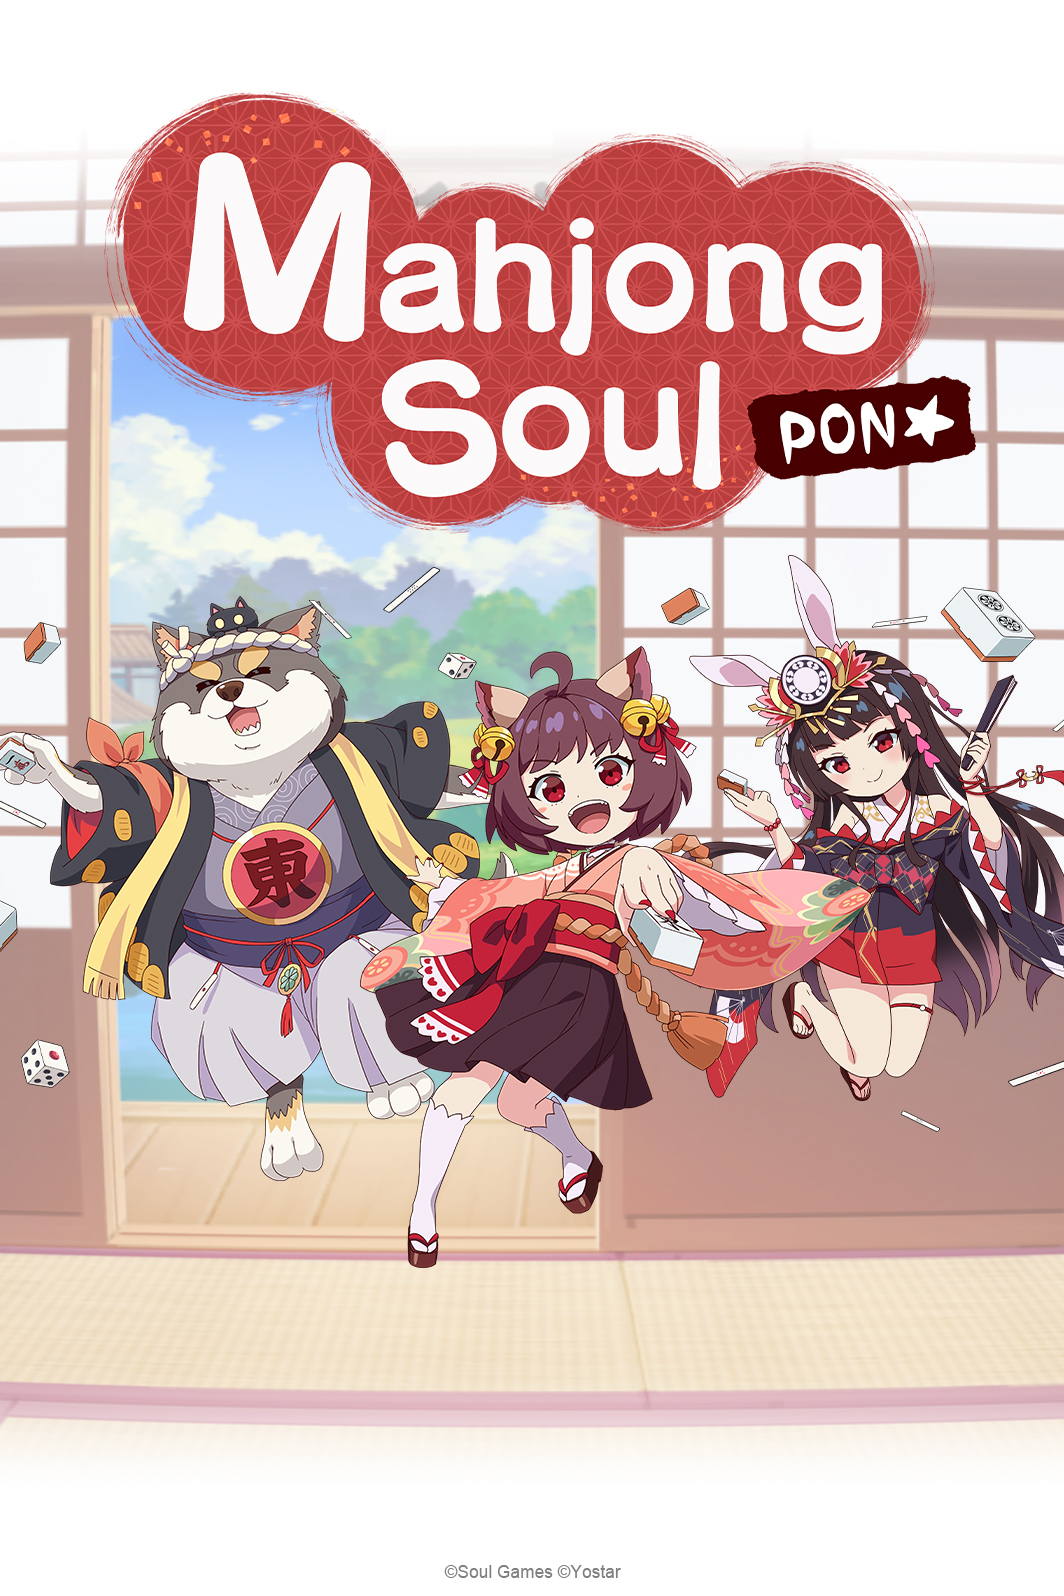 Mahjong Soul Blu-ray Jantama PONG☆Deluxe Edition Limited Quantity